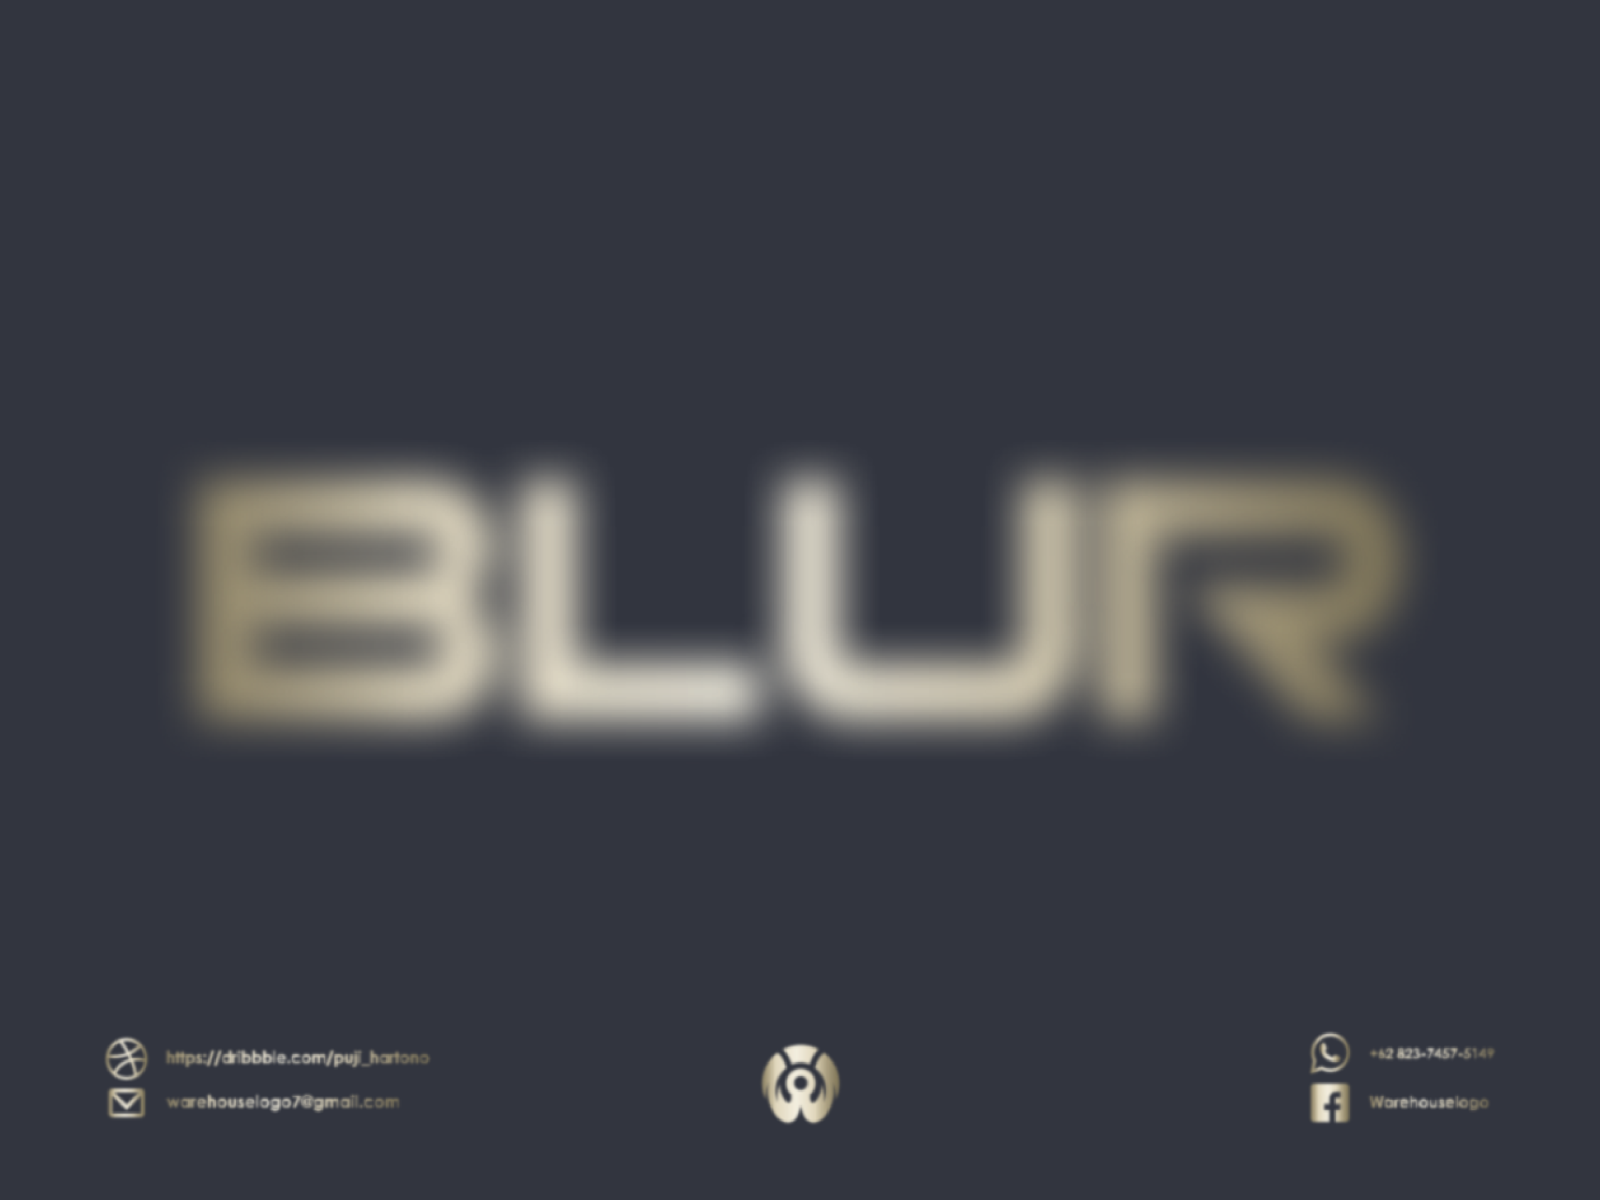 Blur Logos | Blur Logo Maker | BrandCrowd